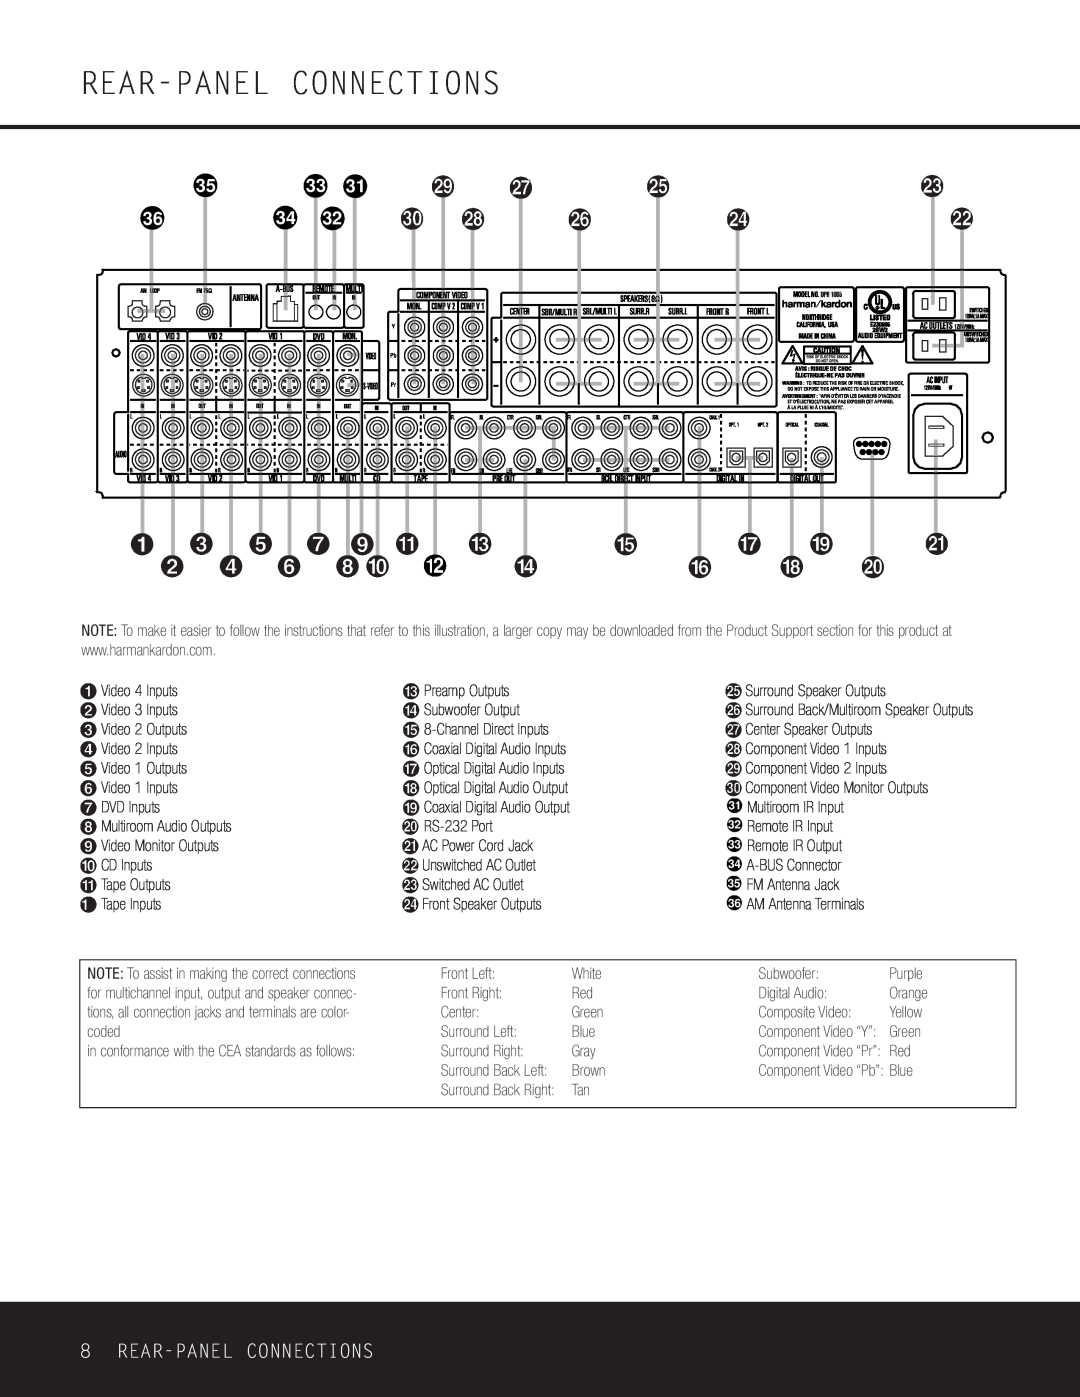 Harman-Kardon DPR 1005 owner manual Rear-Panelconnections, ¡ £ ∞ ¶ ª ⁄ ‹, ¢ § ‚ 2 › 